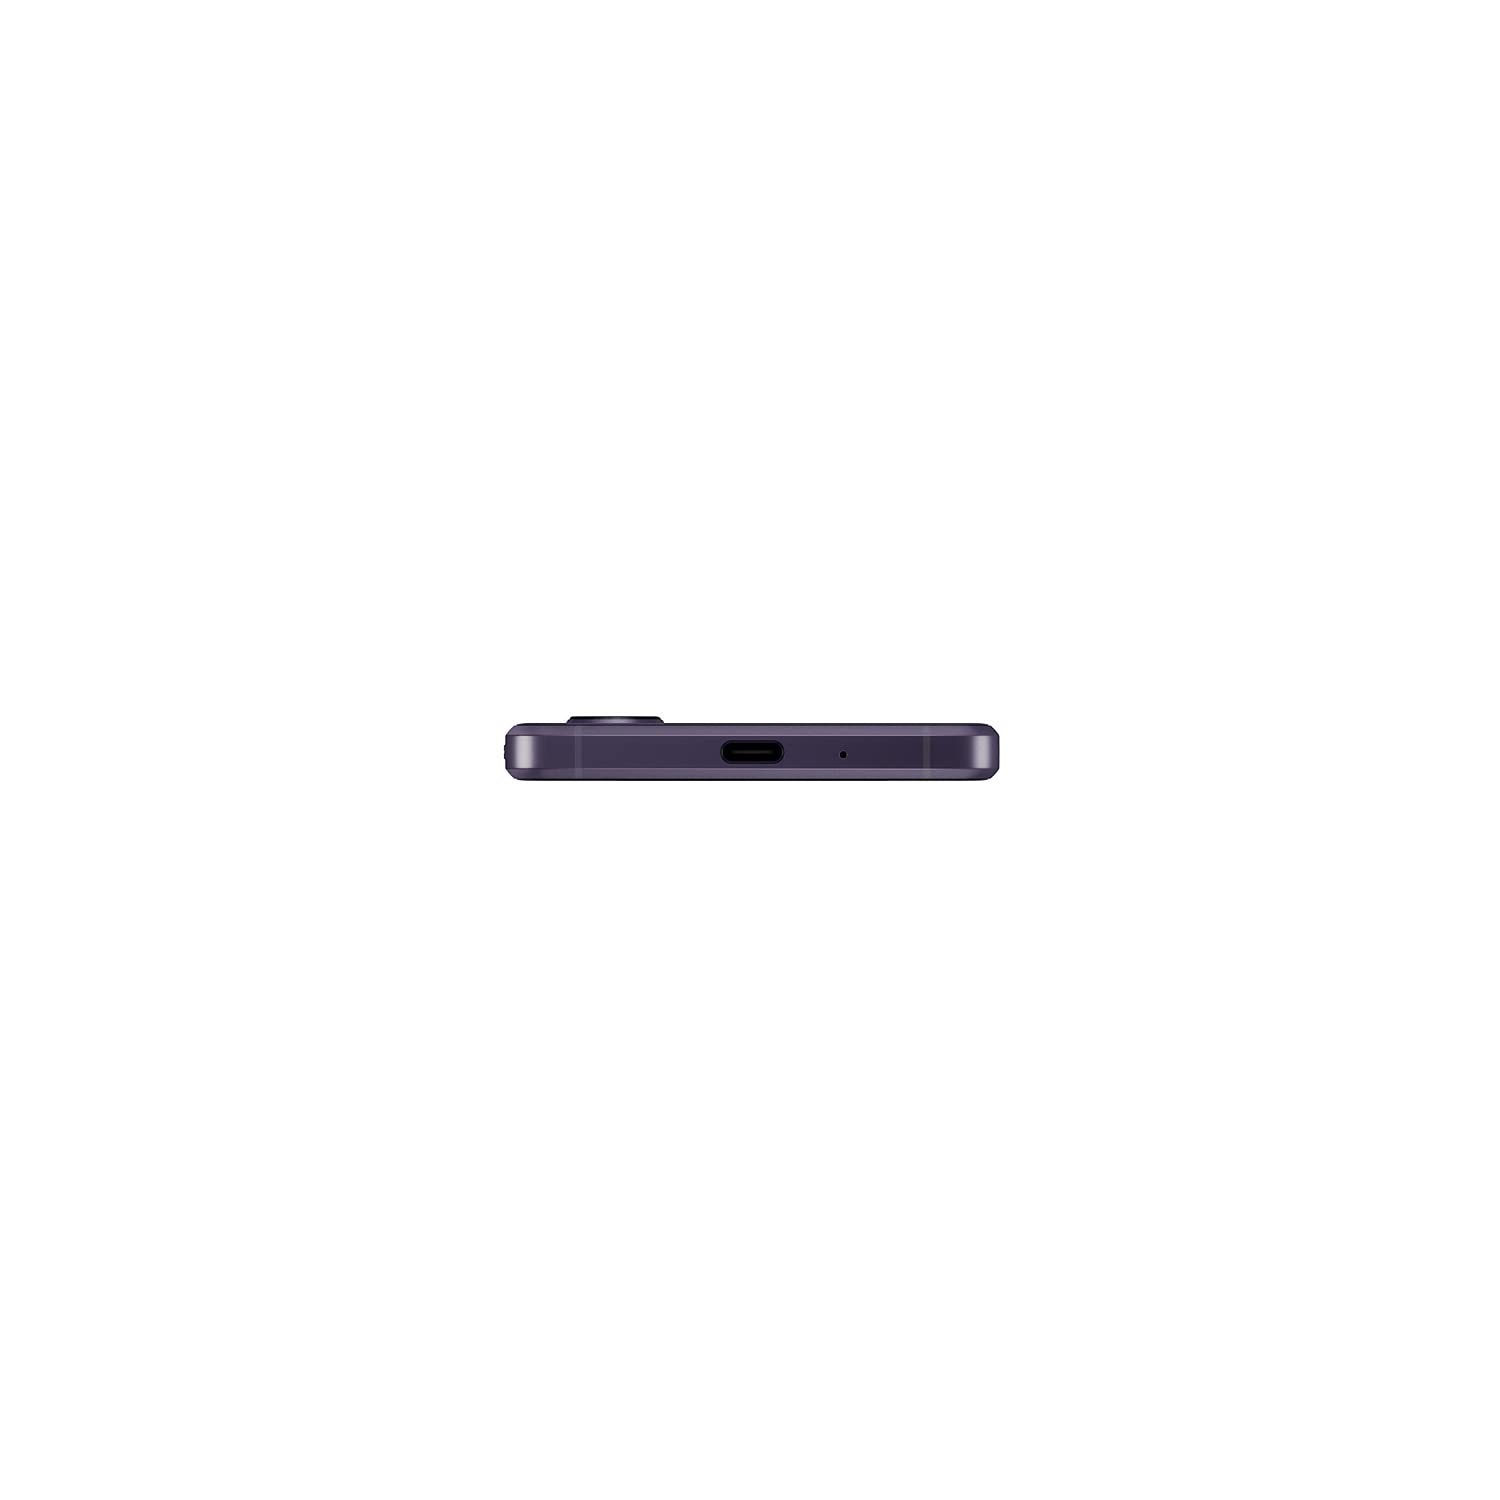 Sony Xperia 1 III 256GB 5G Factory Unlocked Smartphone, Violet [U.S. Official w/Warranty]